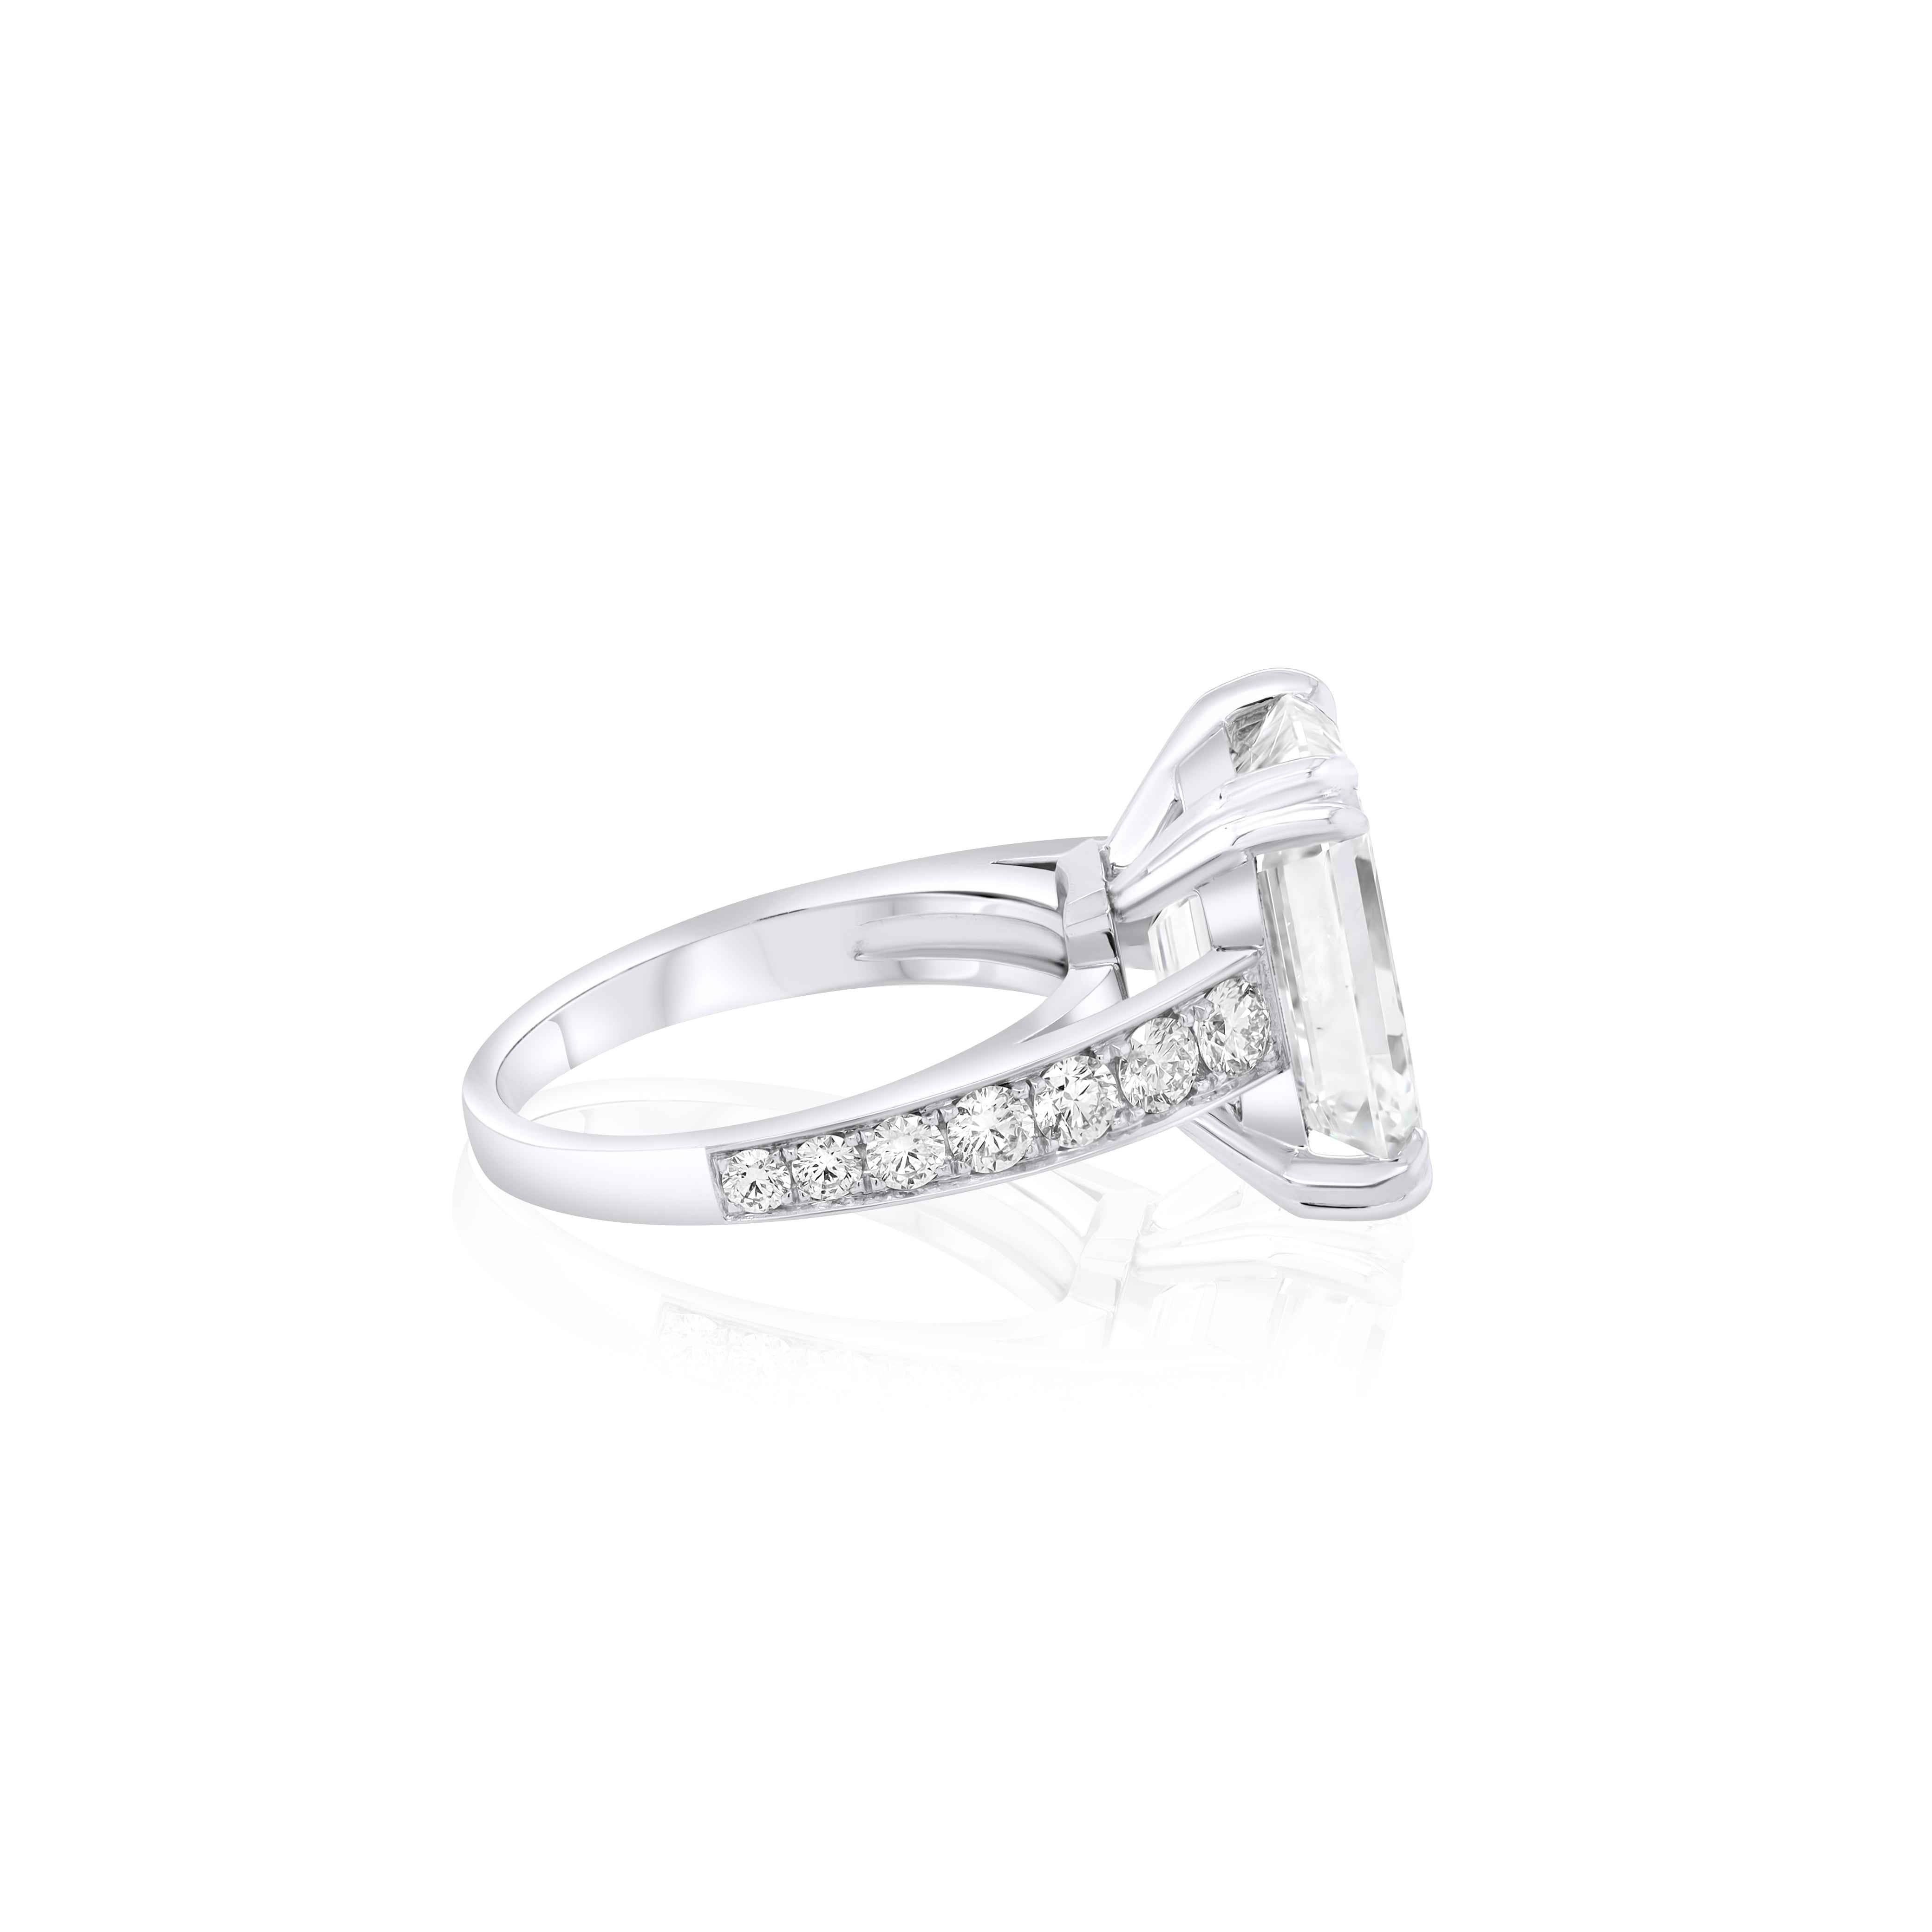 7.59ct Emerald Diamond Ring